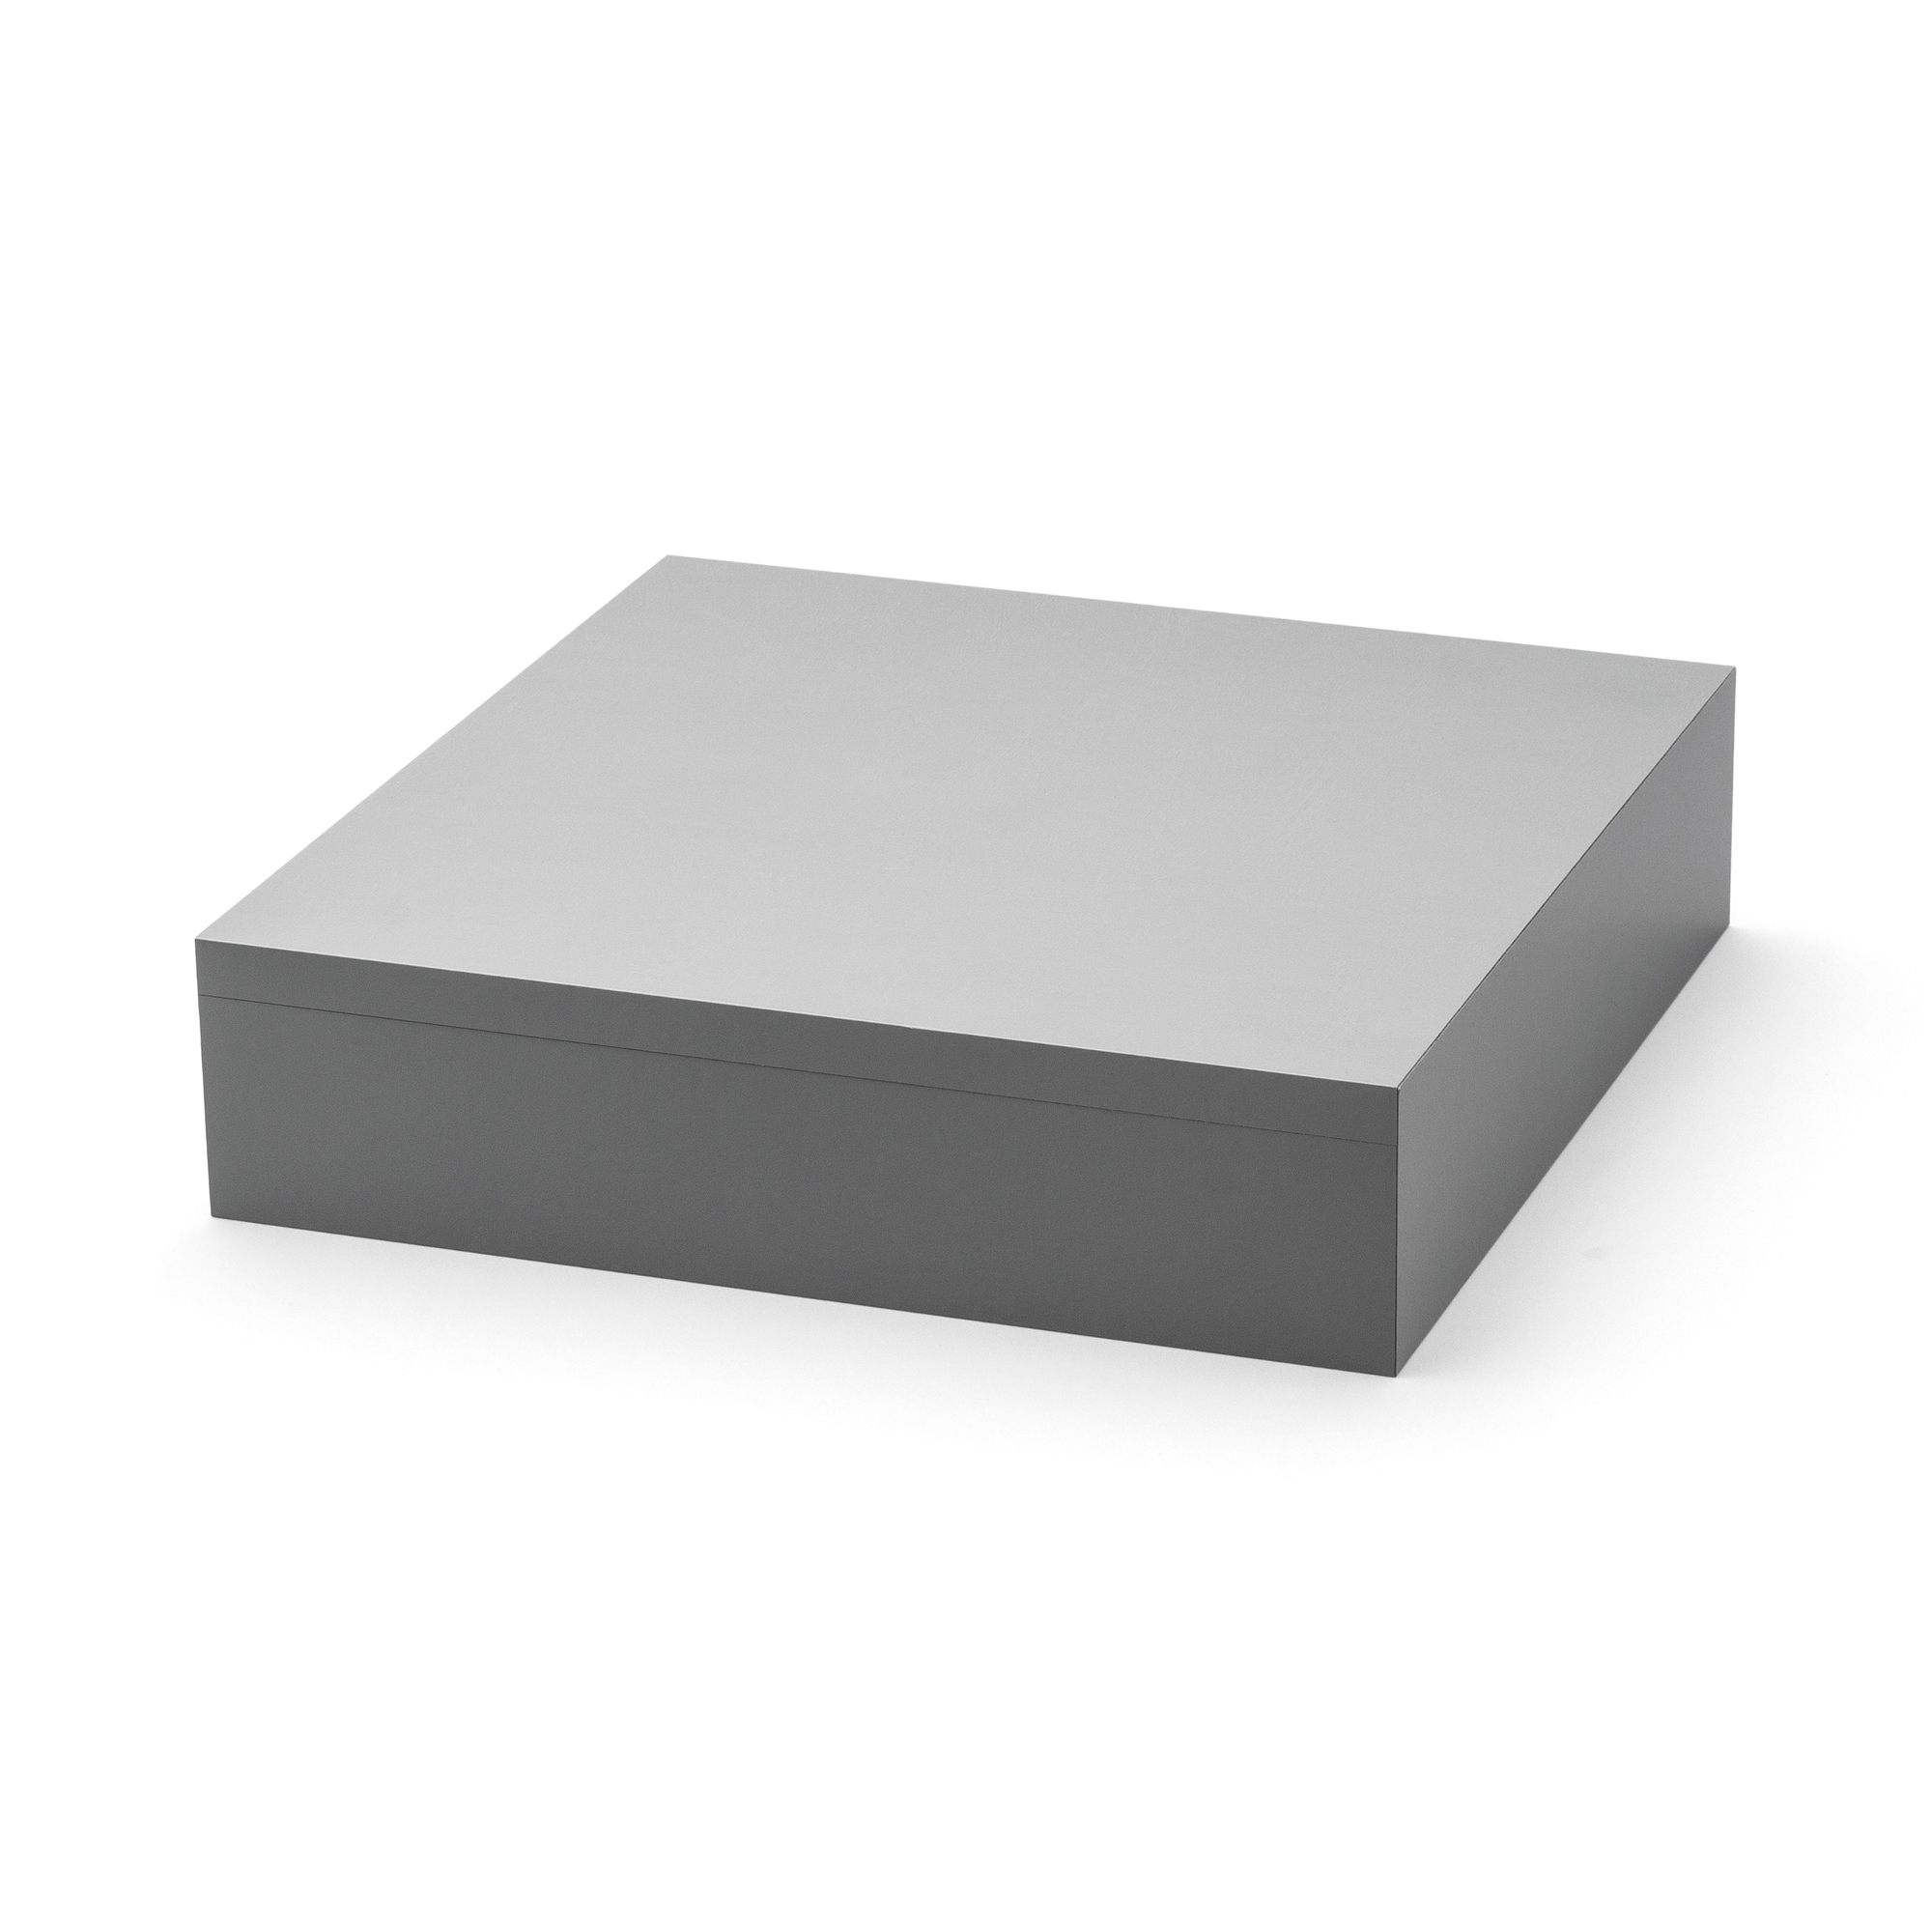 Greybox Kette groß, 200 x 200 x 50 mm